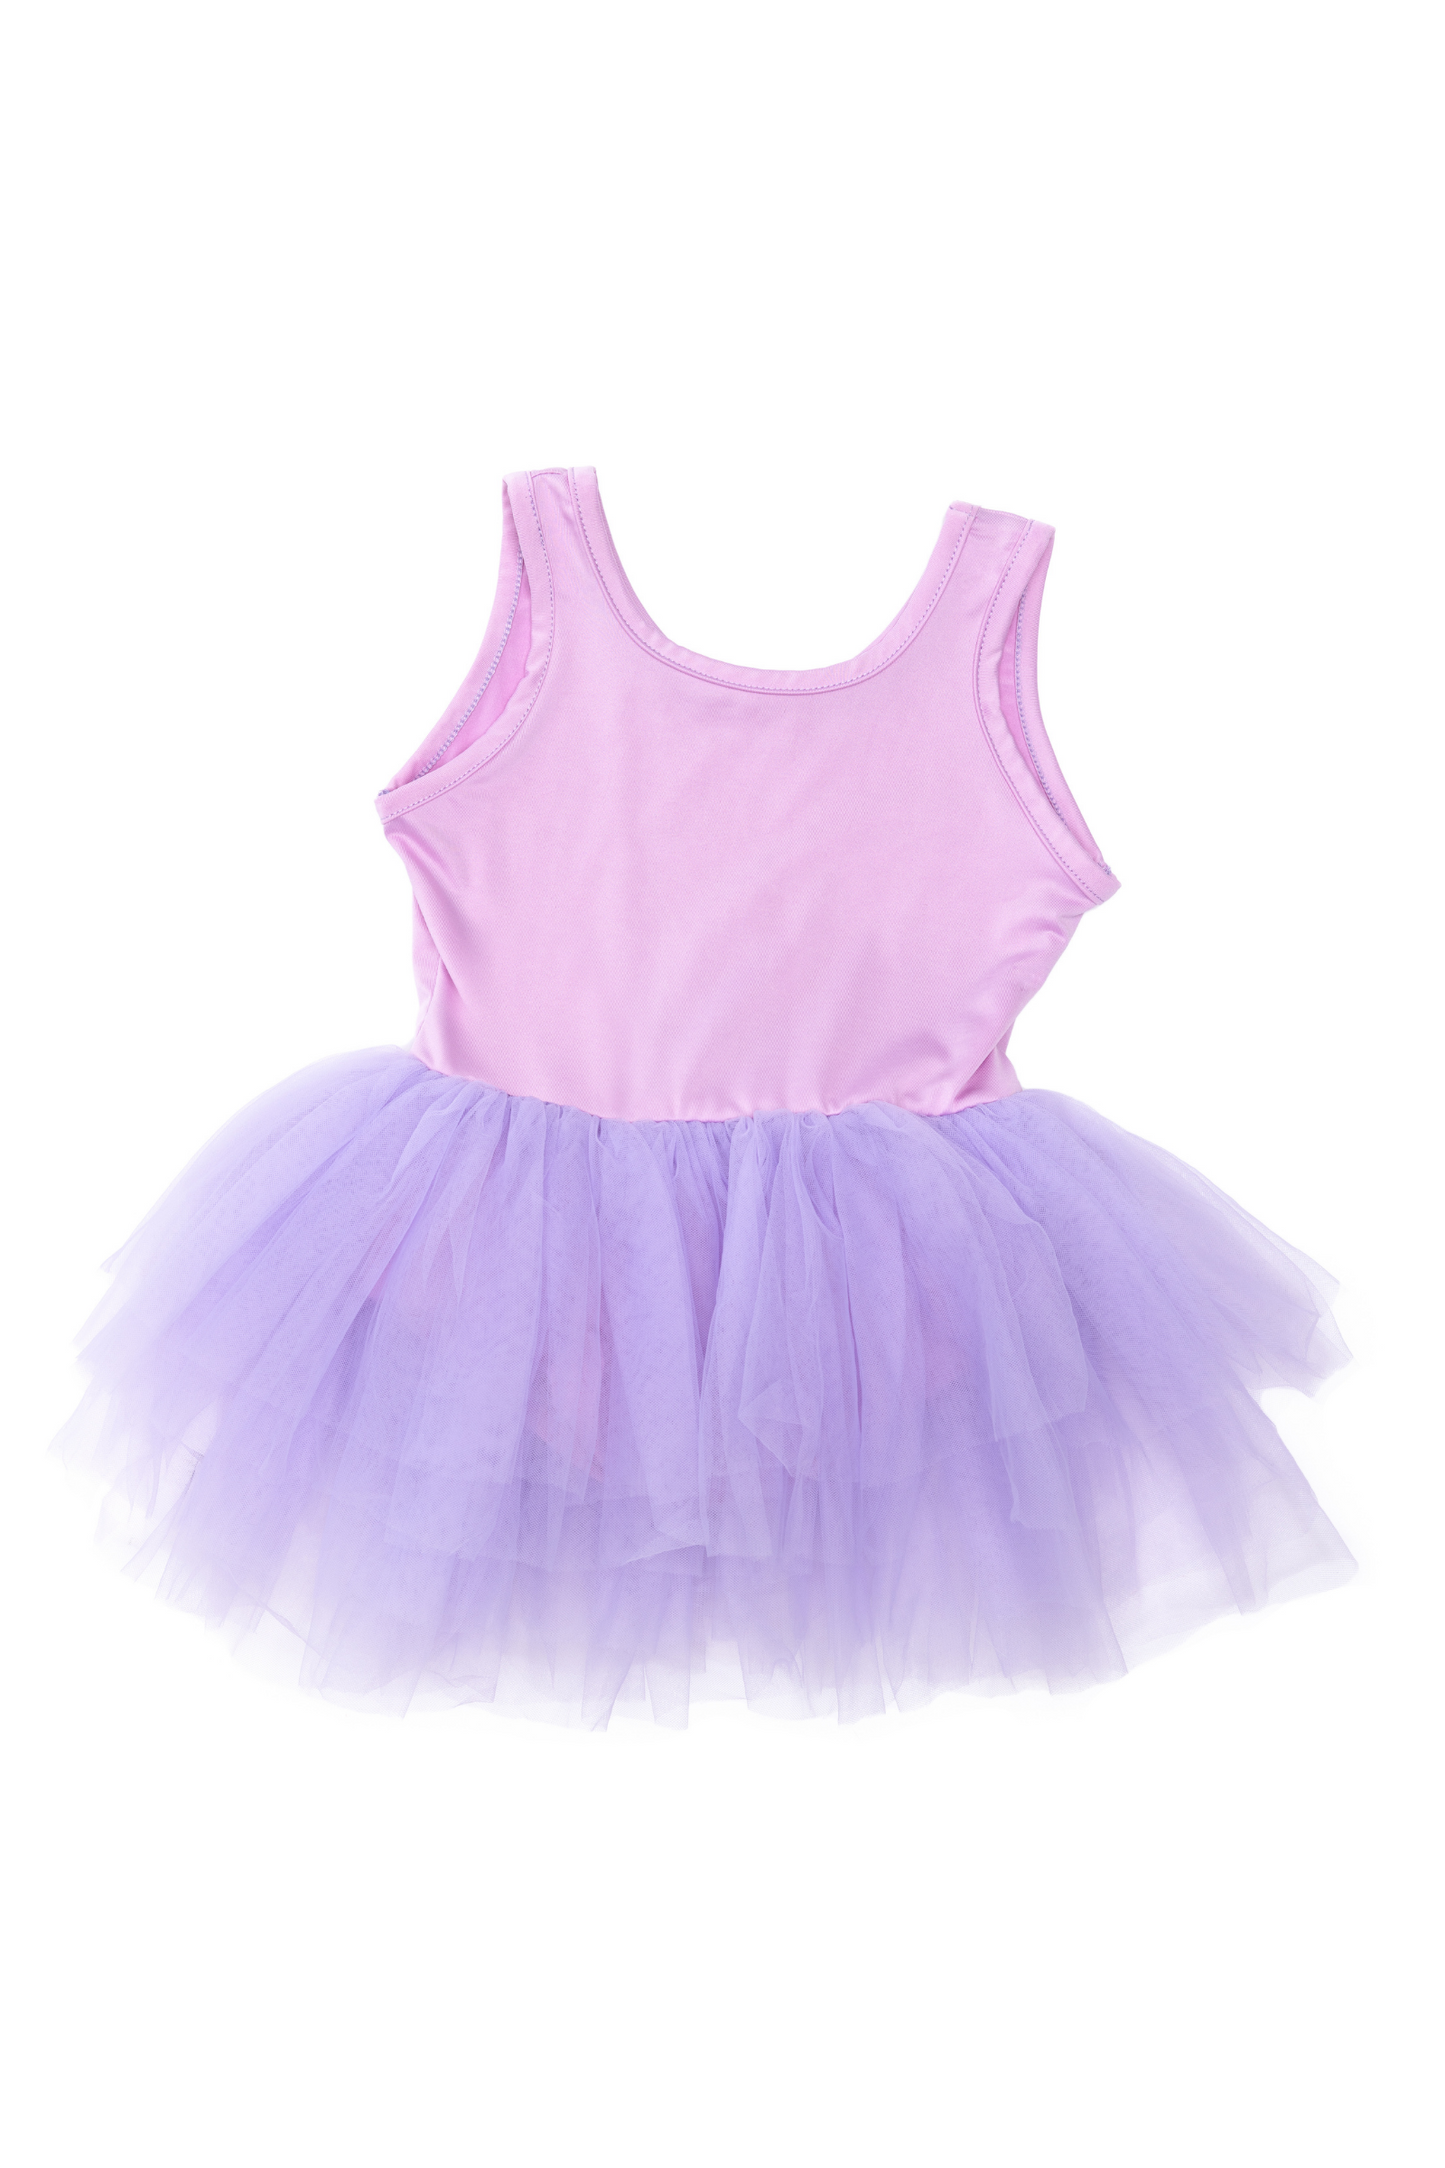 Ballet Tutu Dress Size 5-6